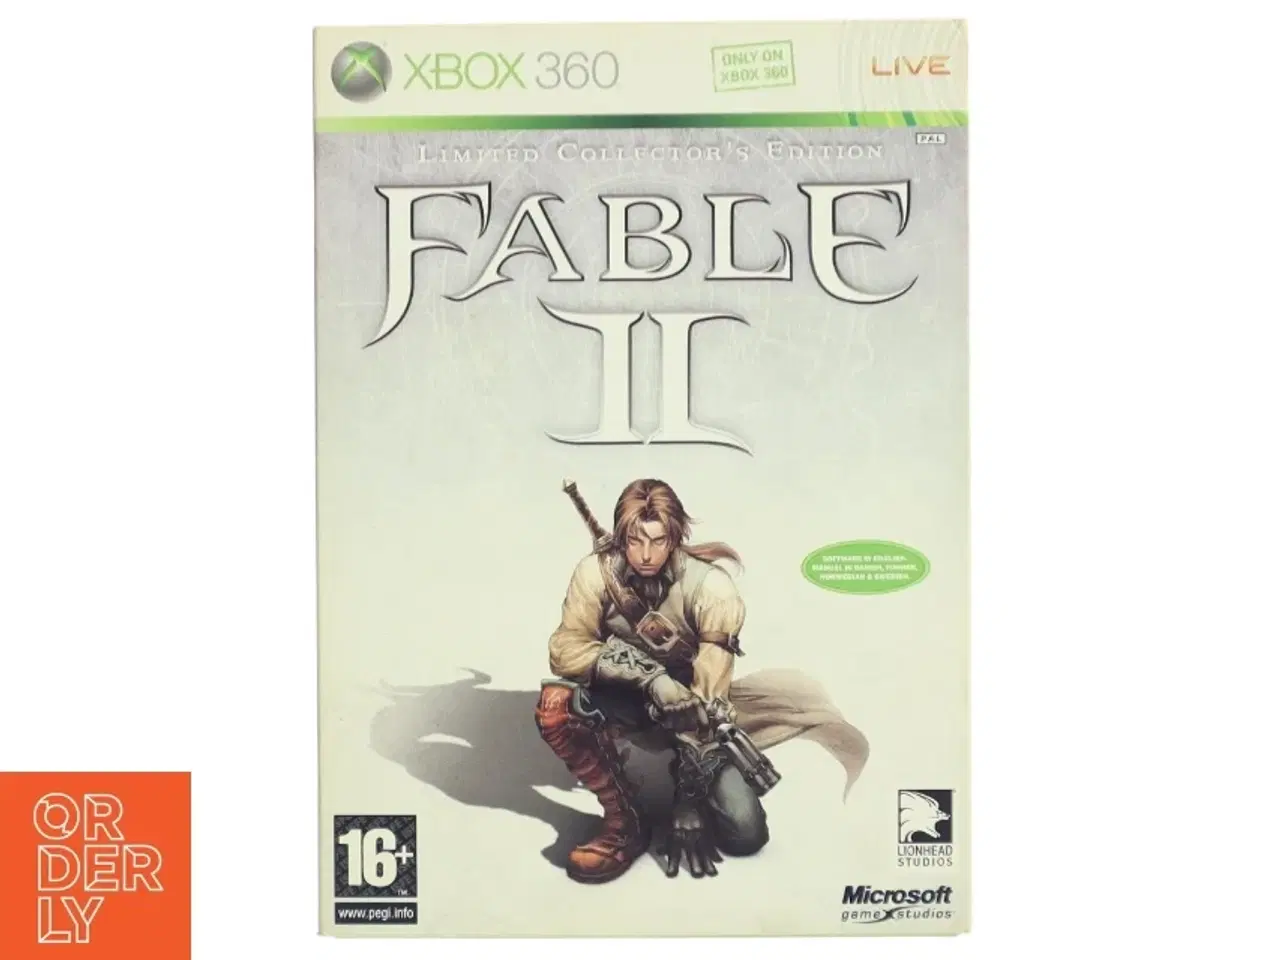 Billede 1 - Fable II Limited Collector's Edition til Xbox 360 fra Microsoft